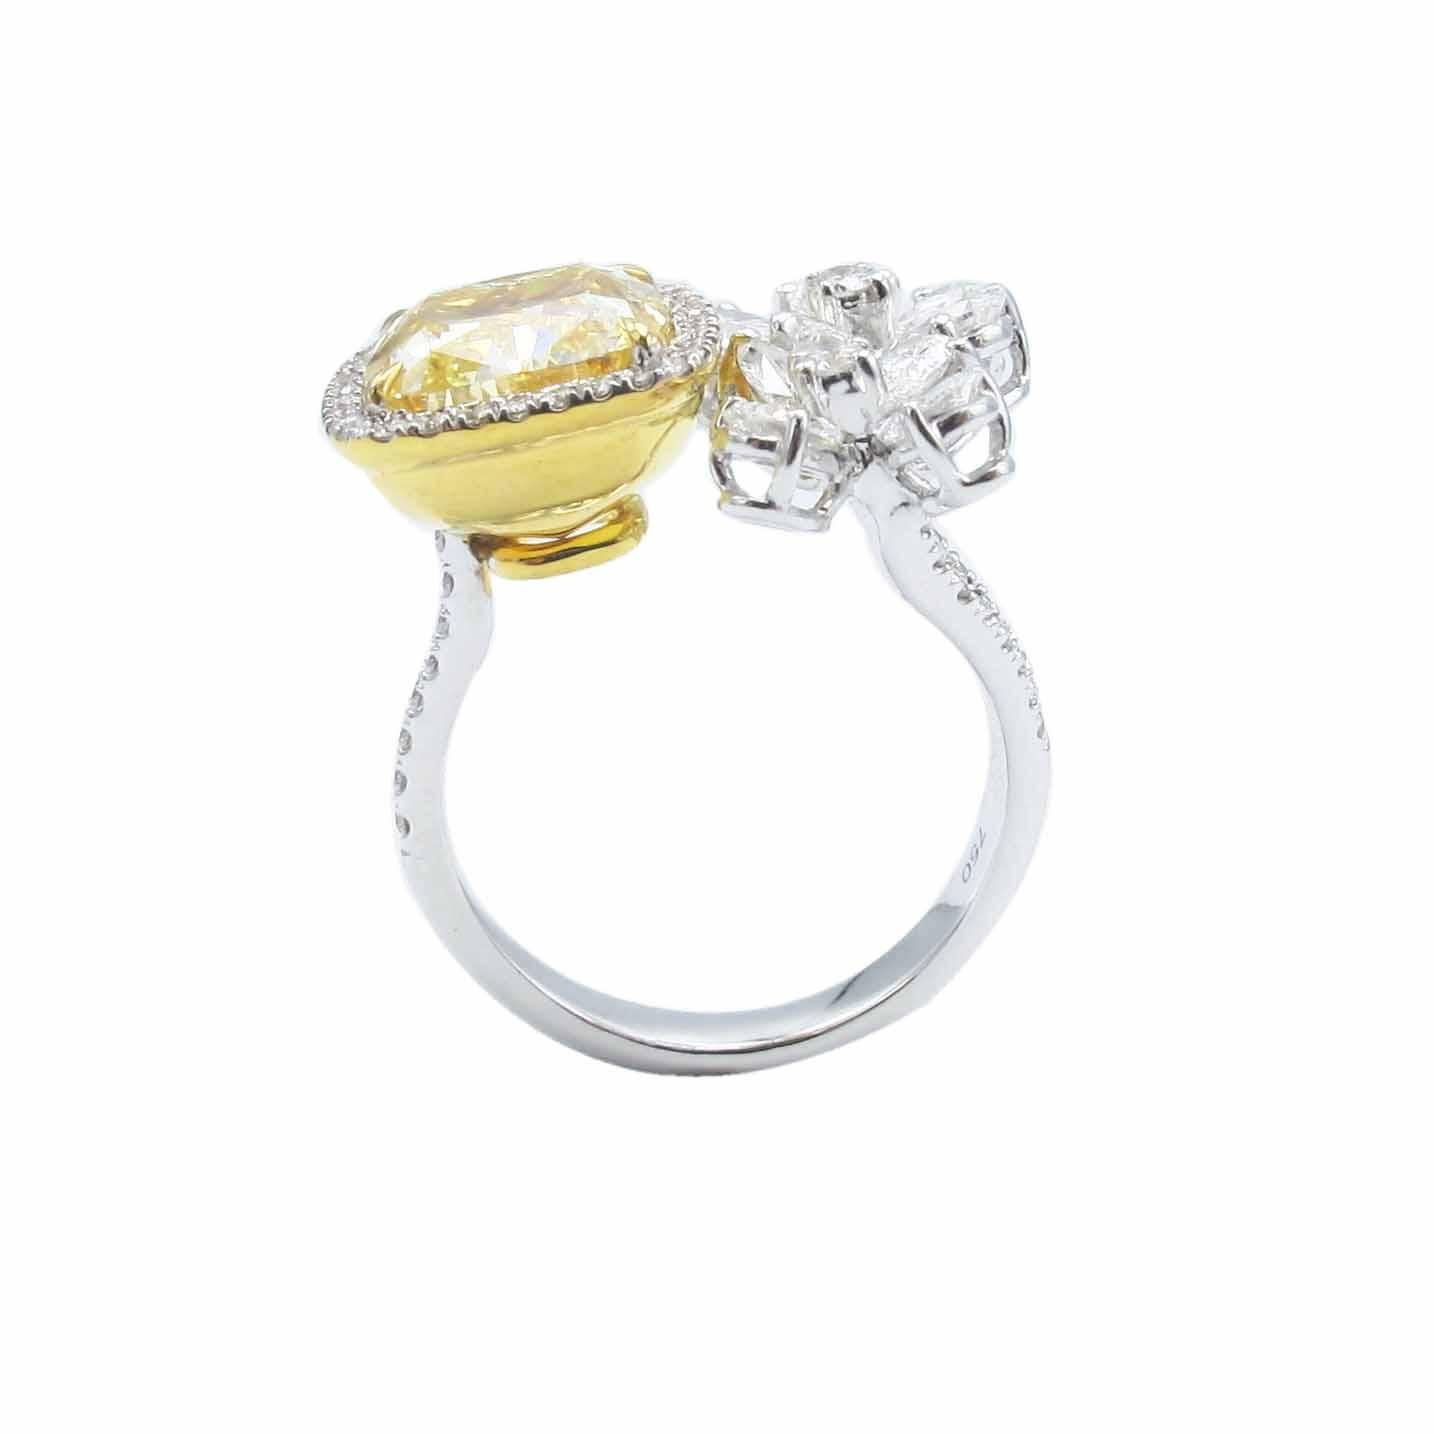 Cushion Cut Emilio Jewelry 1.78 Carat Fancy Yellow Diamond Flower Cocktail Ring For Sale